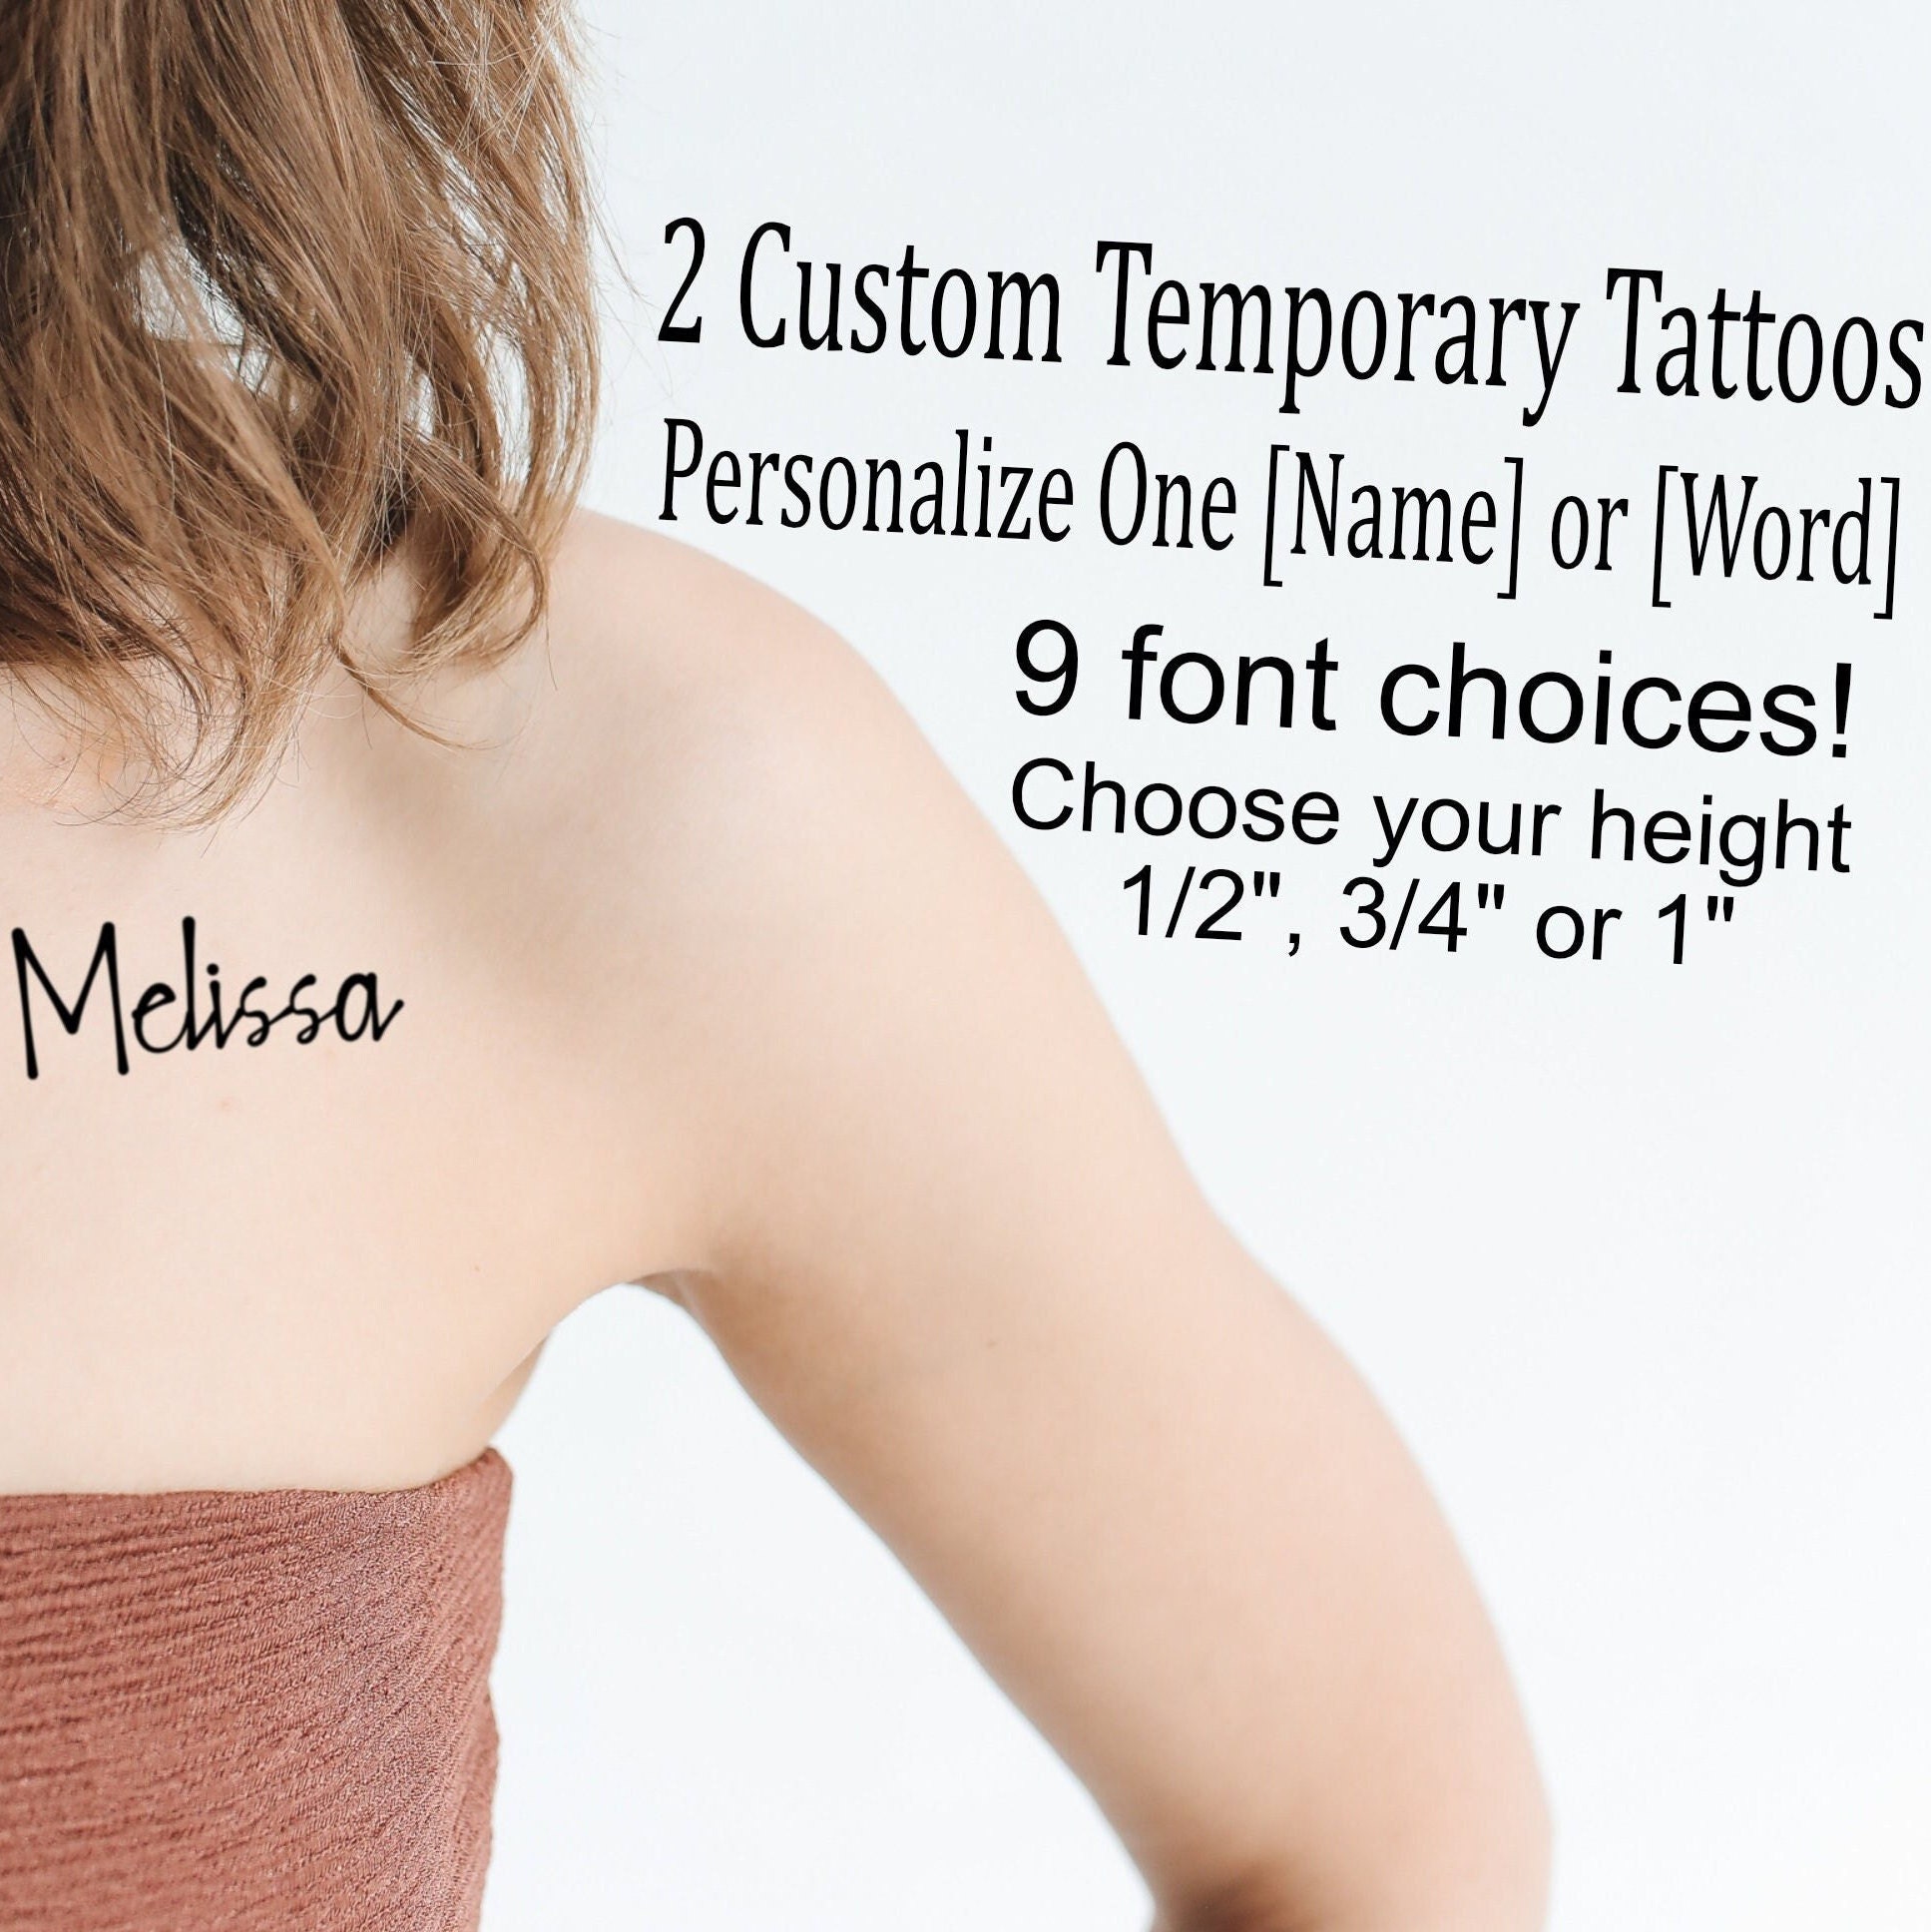 1-Word Tattoos Ideas and Photos | POPSUGAR Beauty